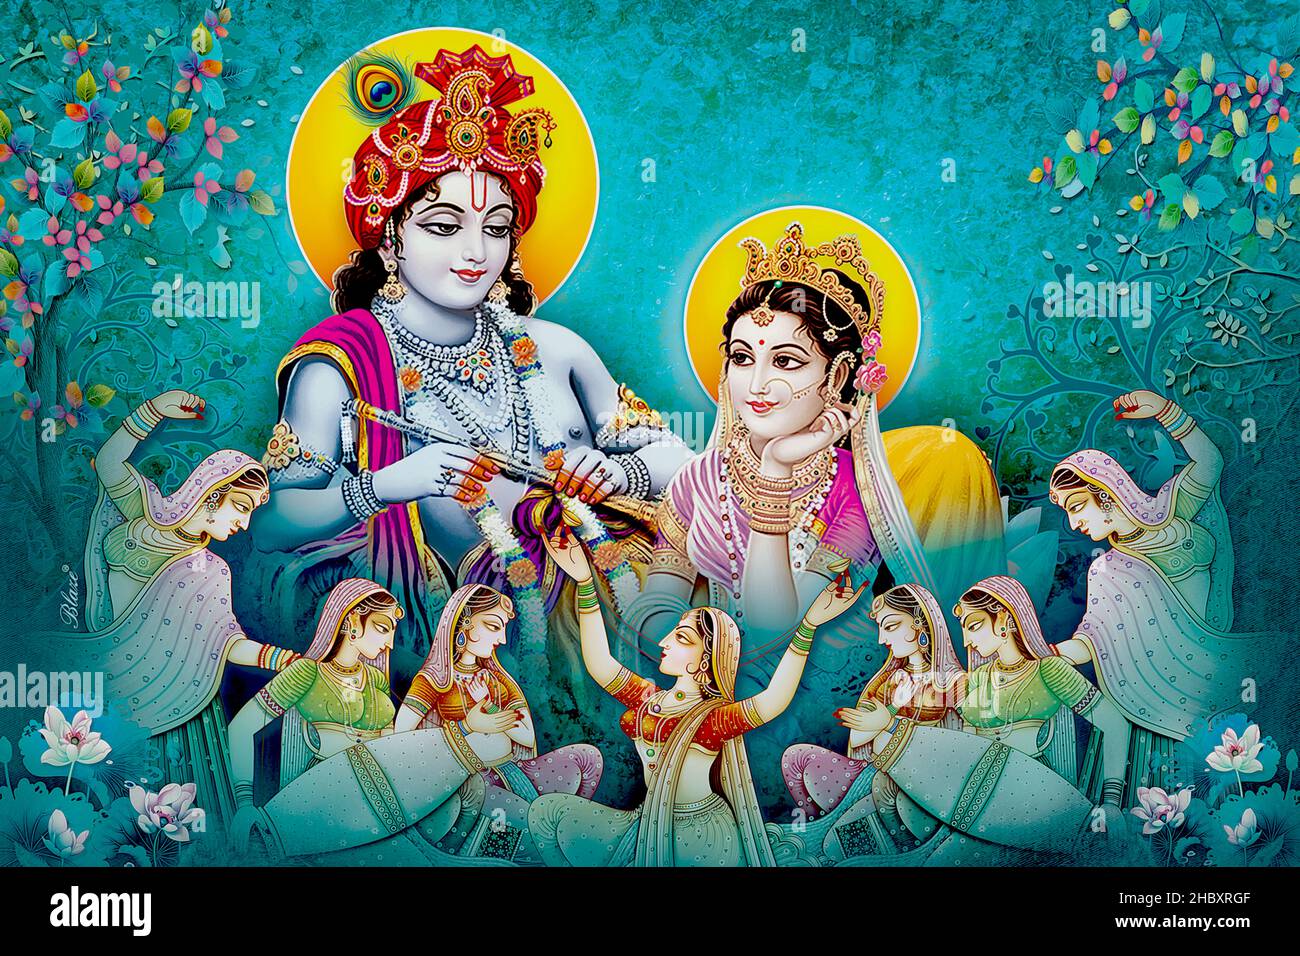 Hindu Lord Radha kishana texture wallpaper background Stock Photo